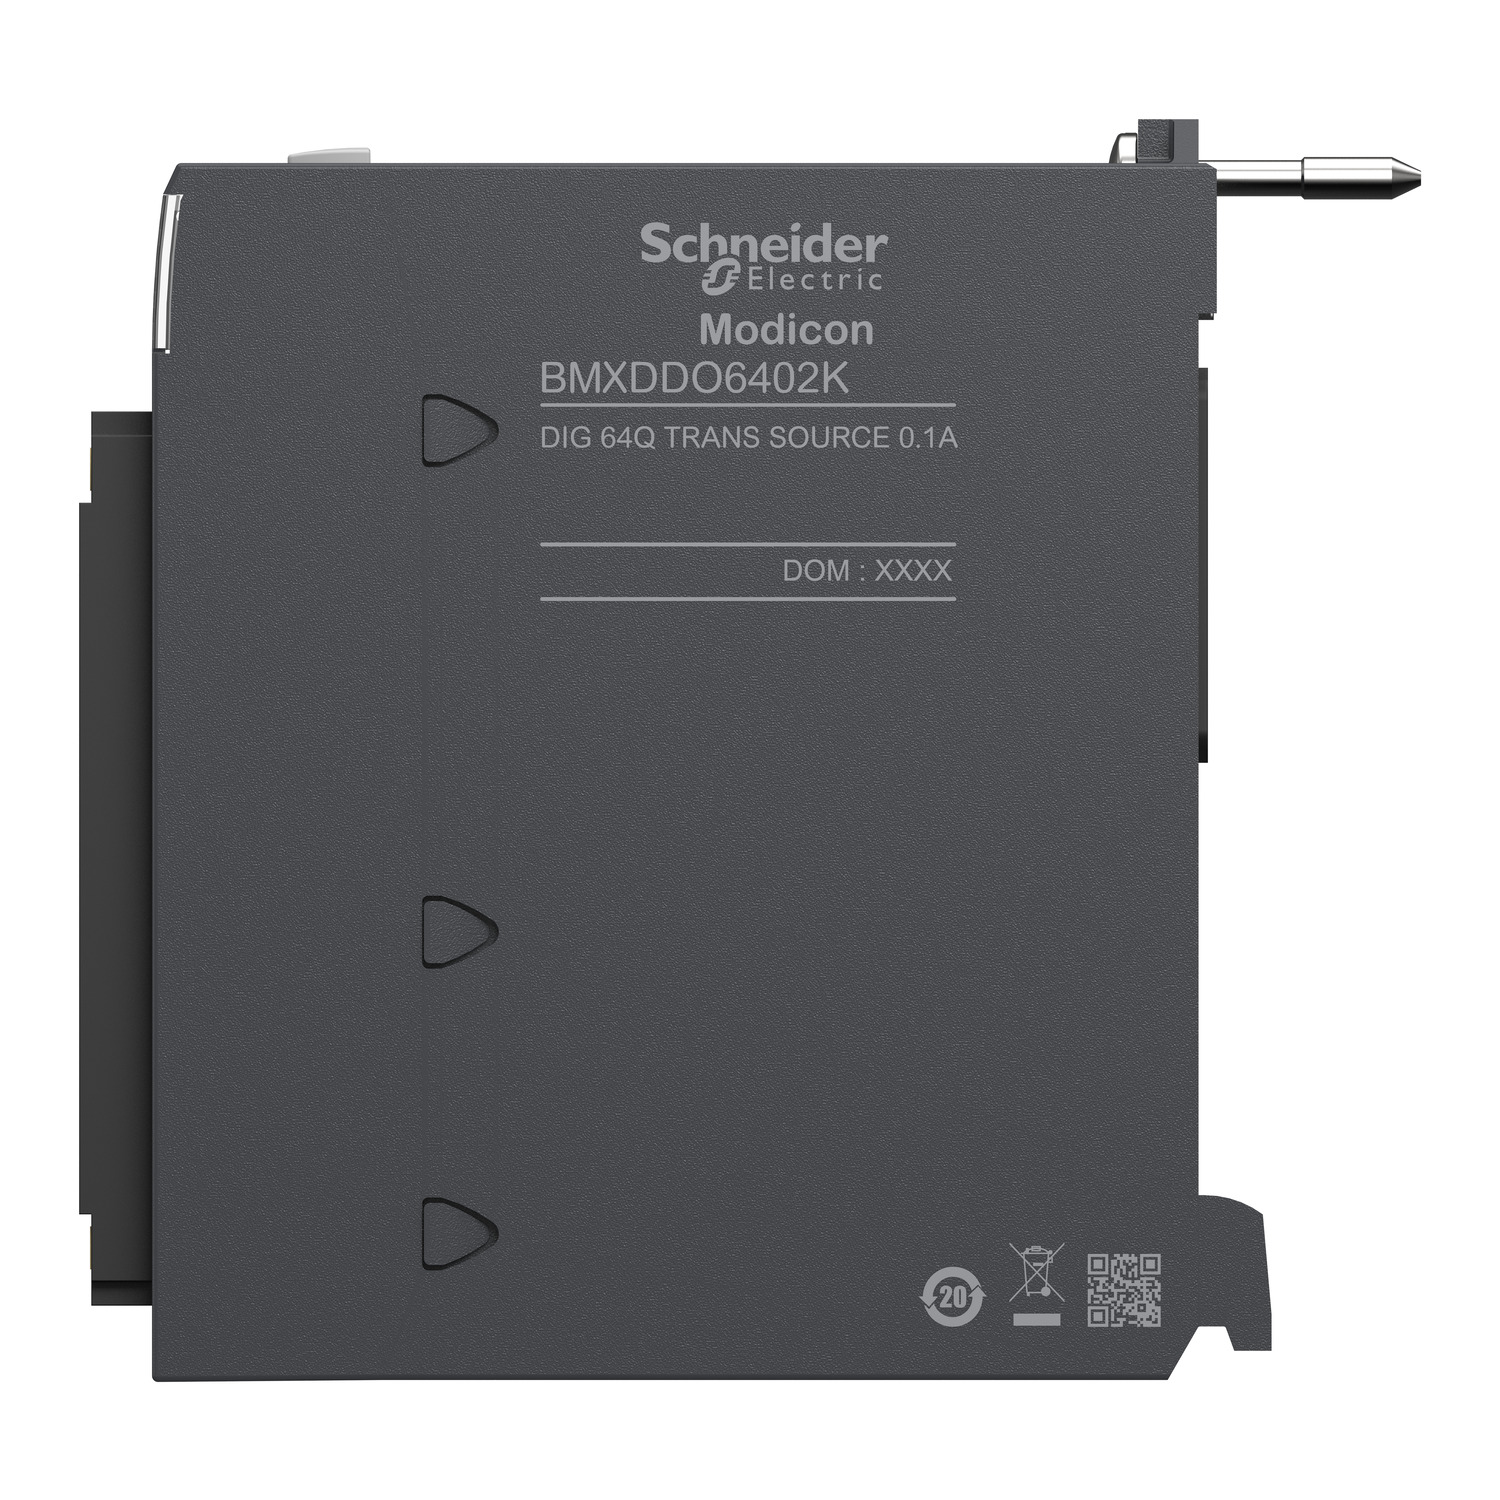 BMXDDO6402K - discrete output module, Modicon X80, 64 transistor 